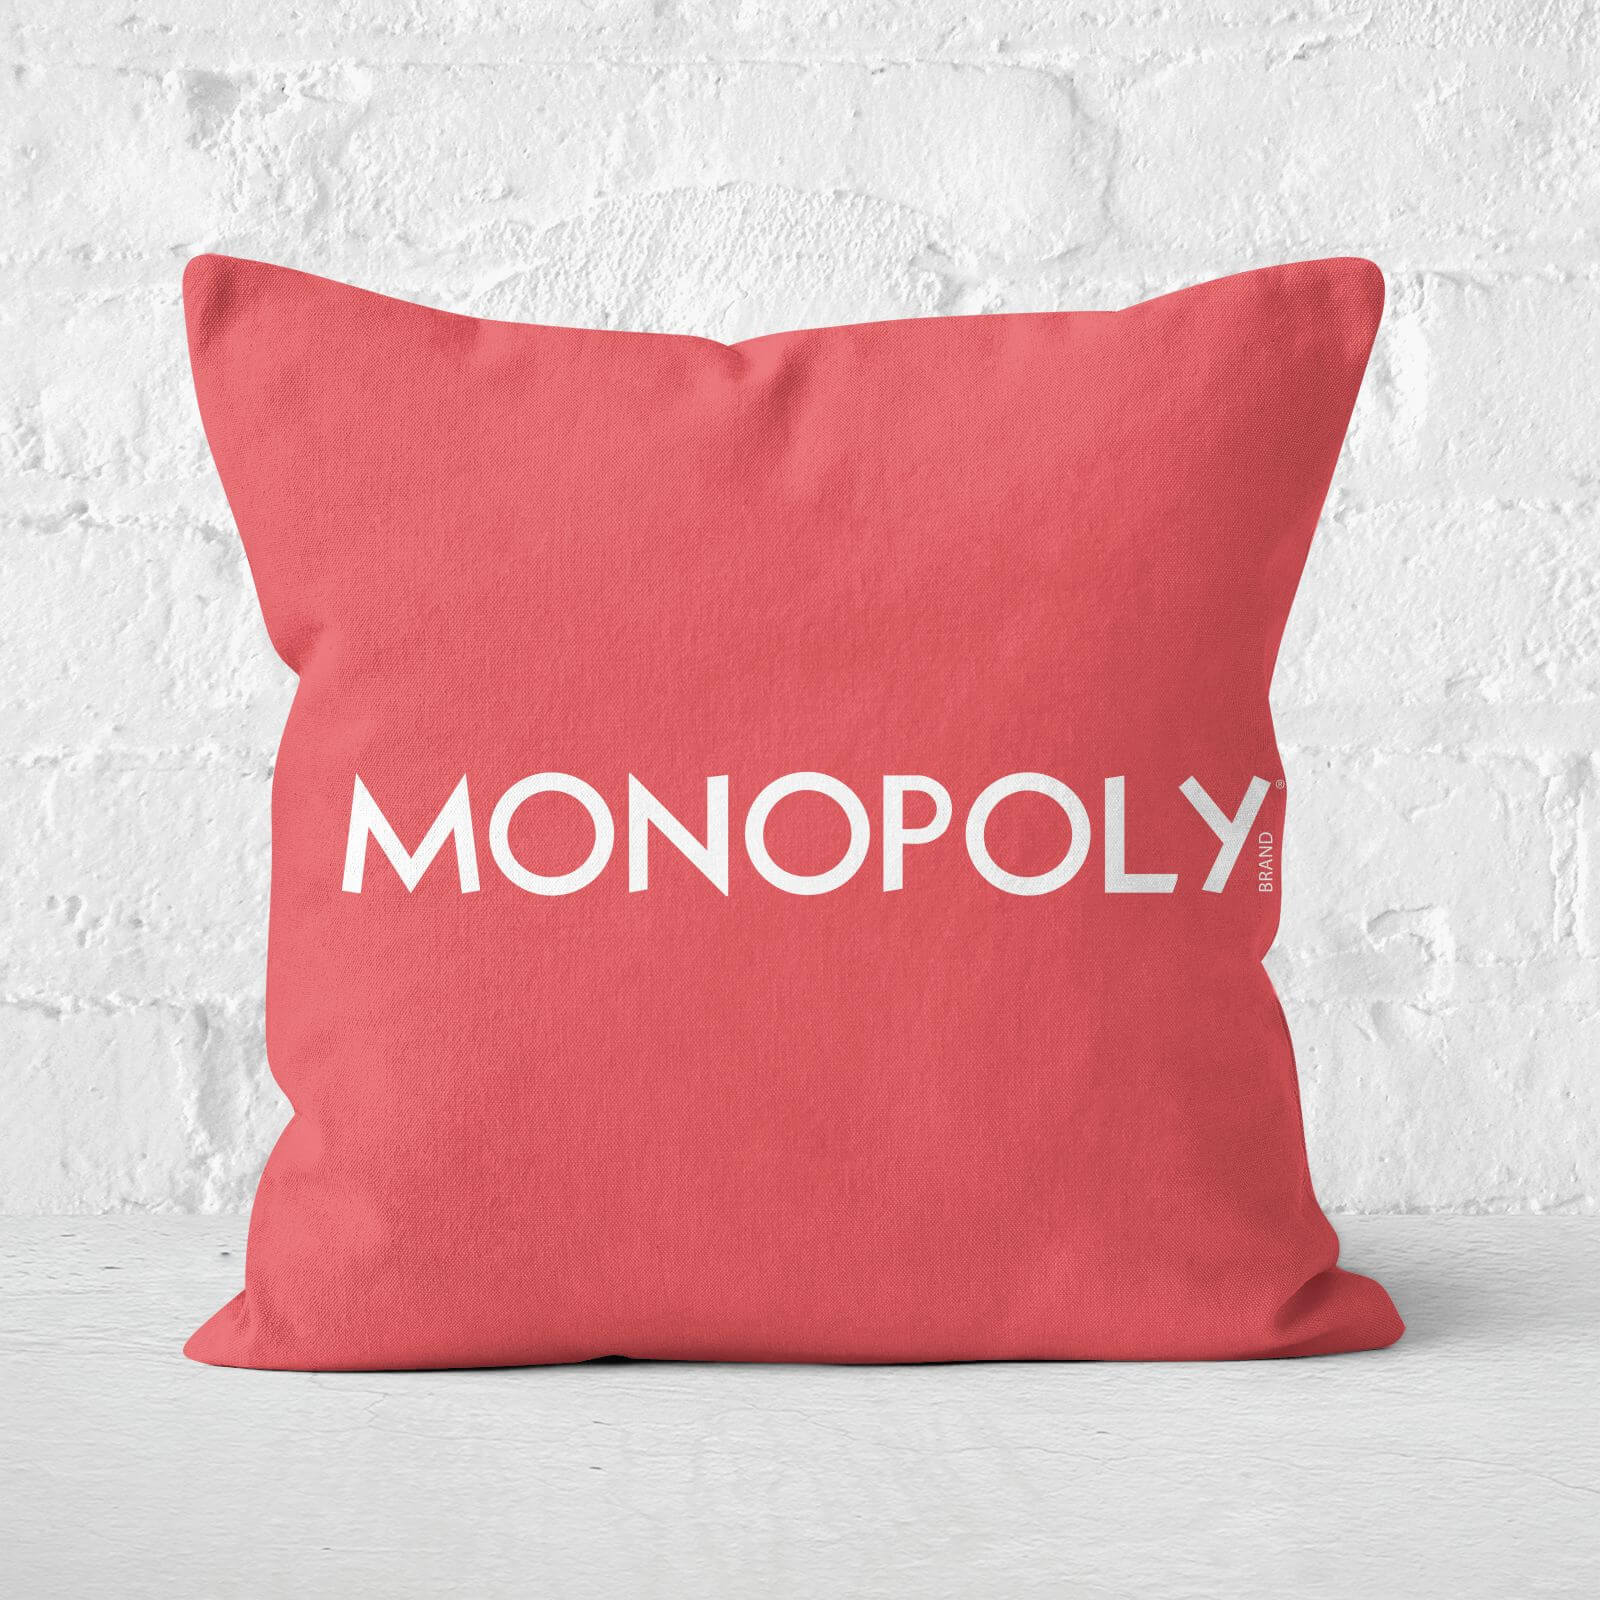 Monopoly Pattern Square Cushion - 60x60cm - Eco Friendly